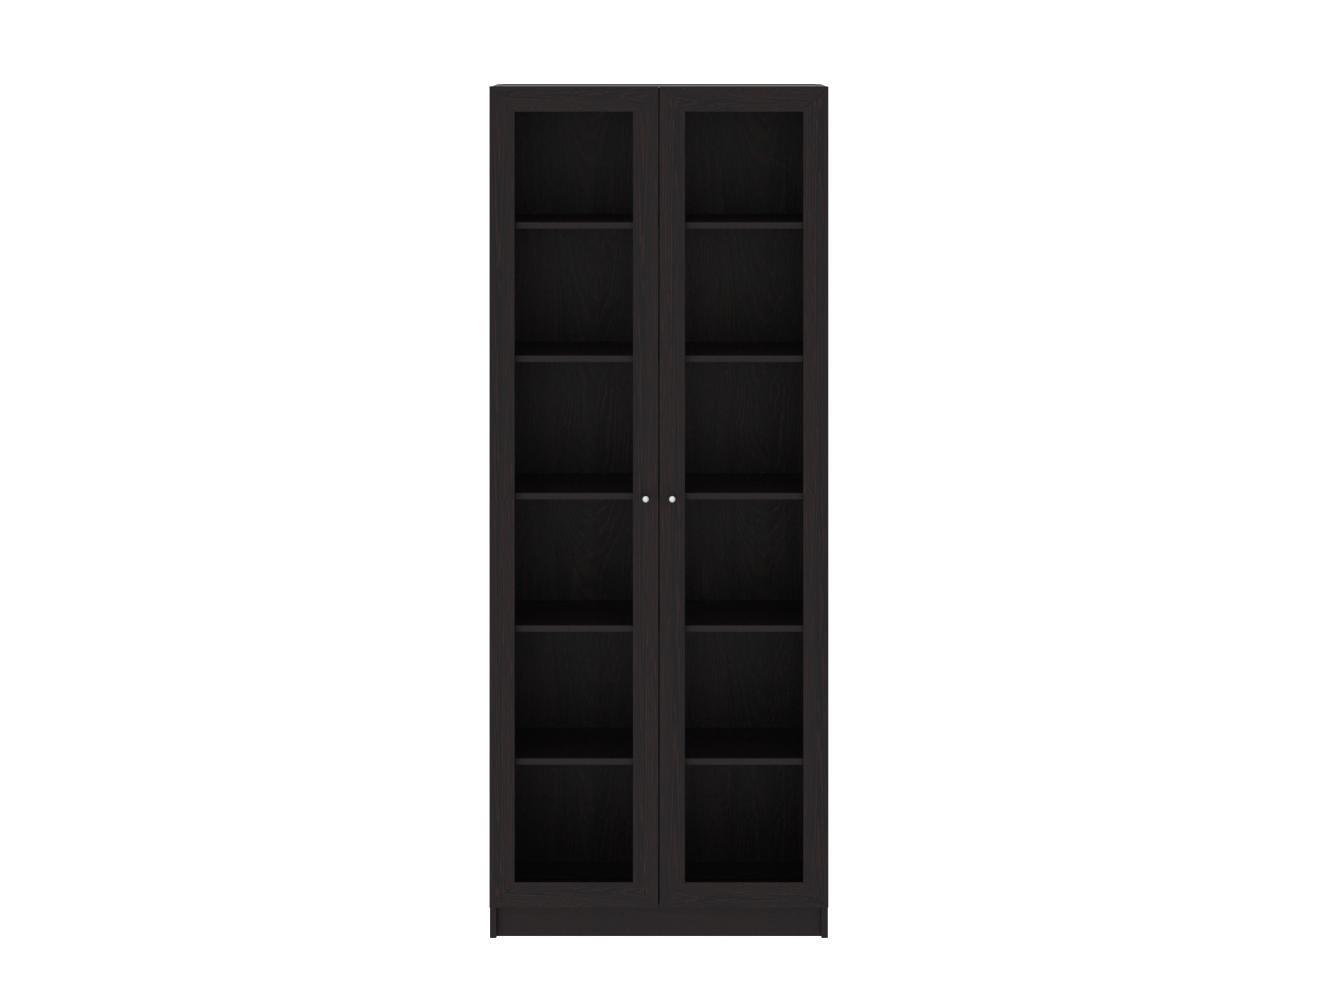 Книжный шкаф Билли 336 wenge tsava ИКЕА (IKEA) изображение товара